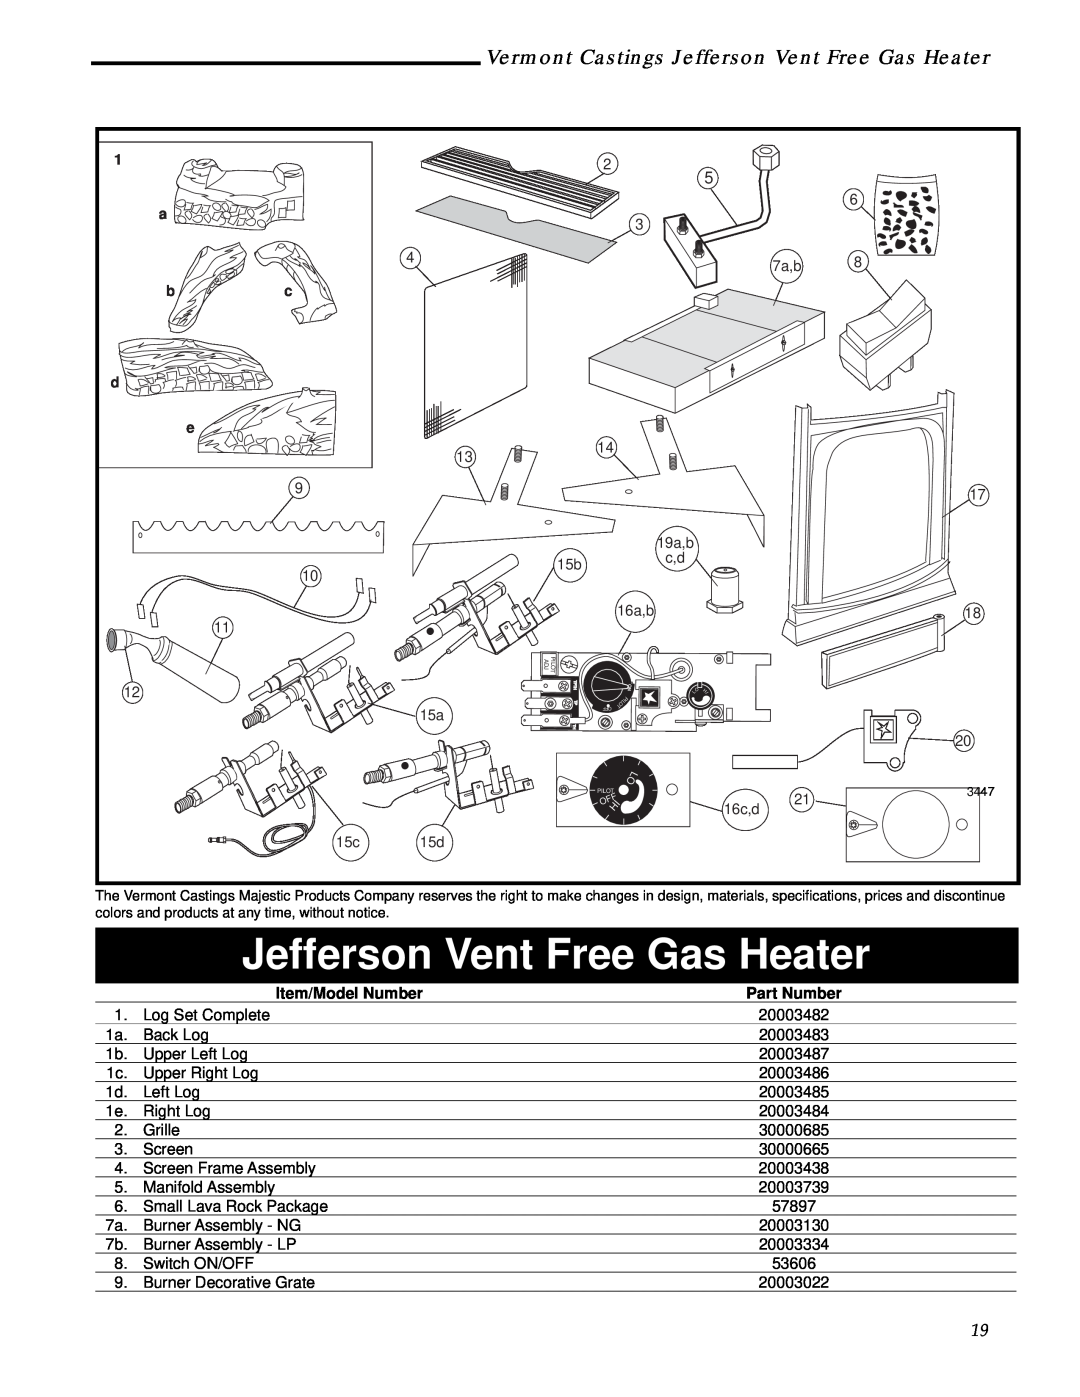 Majestic Appliances 3102, 3112, 3111 Vermont Castings Jefferson Vent Free Gas Heater, Item/Model Number, Part Number 